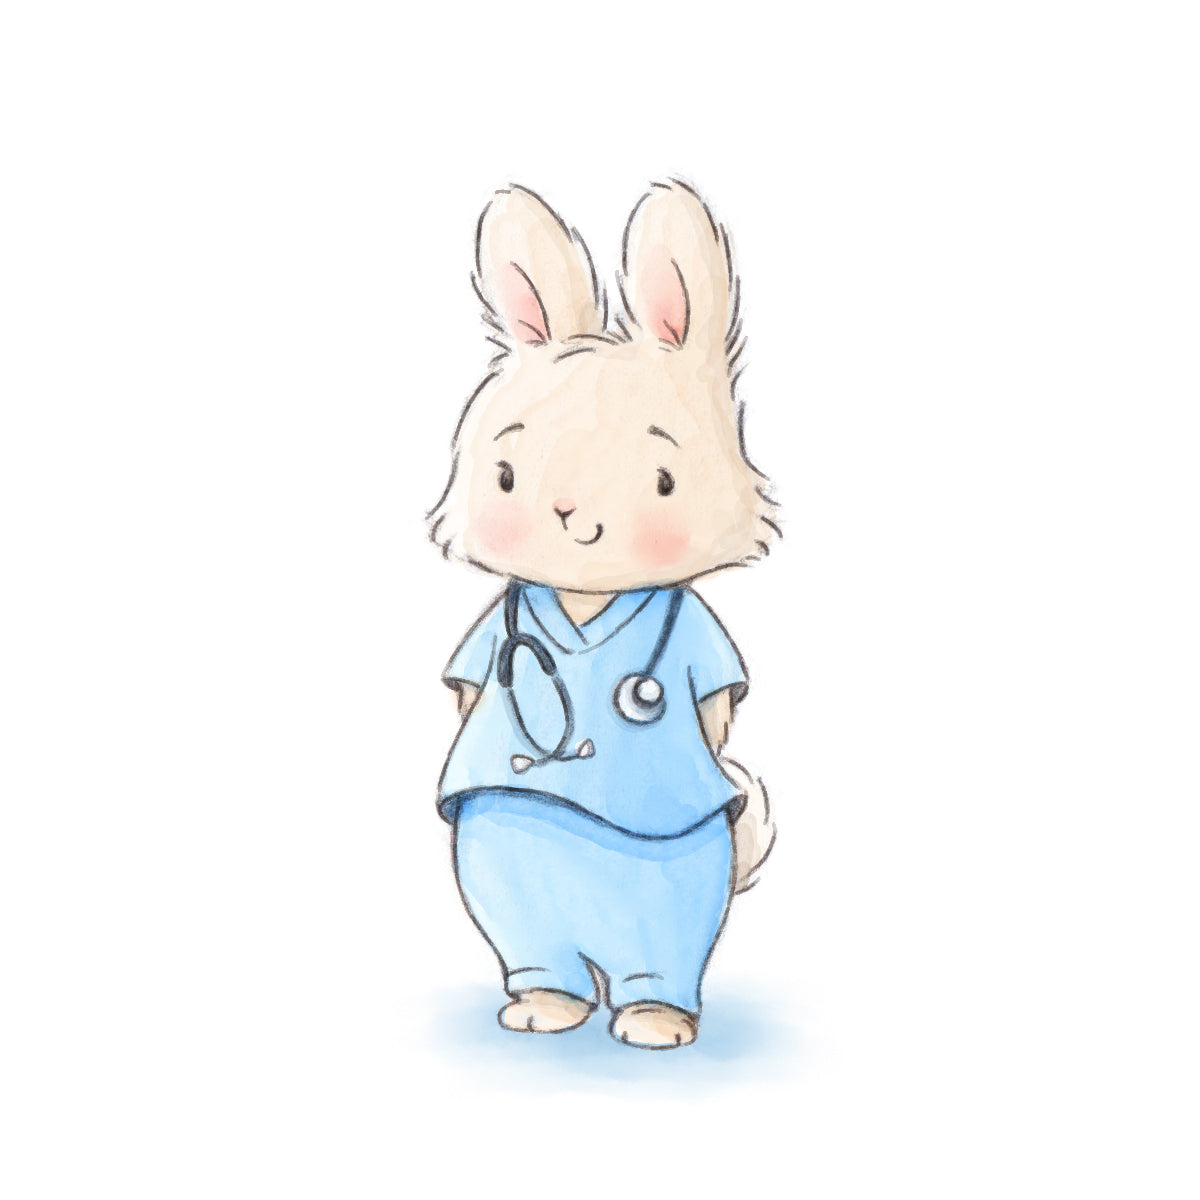 Cute bunny doctor illustration